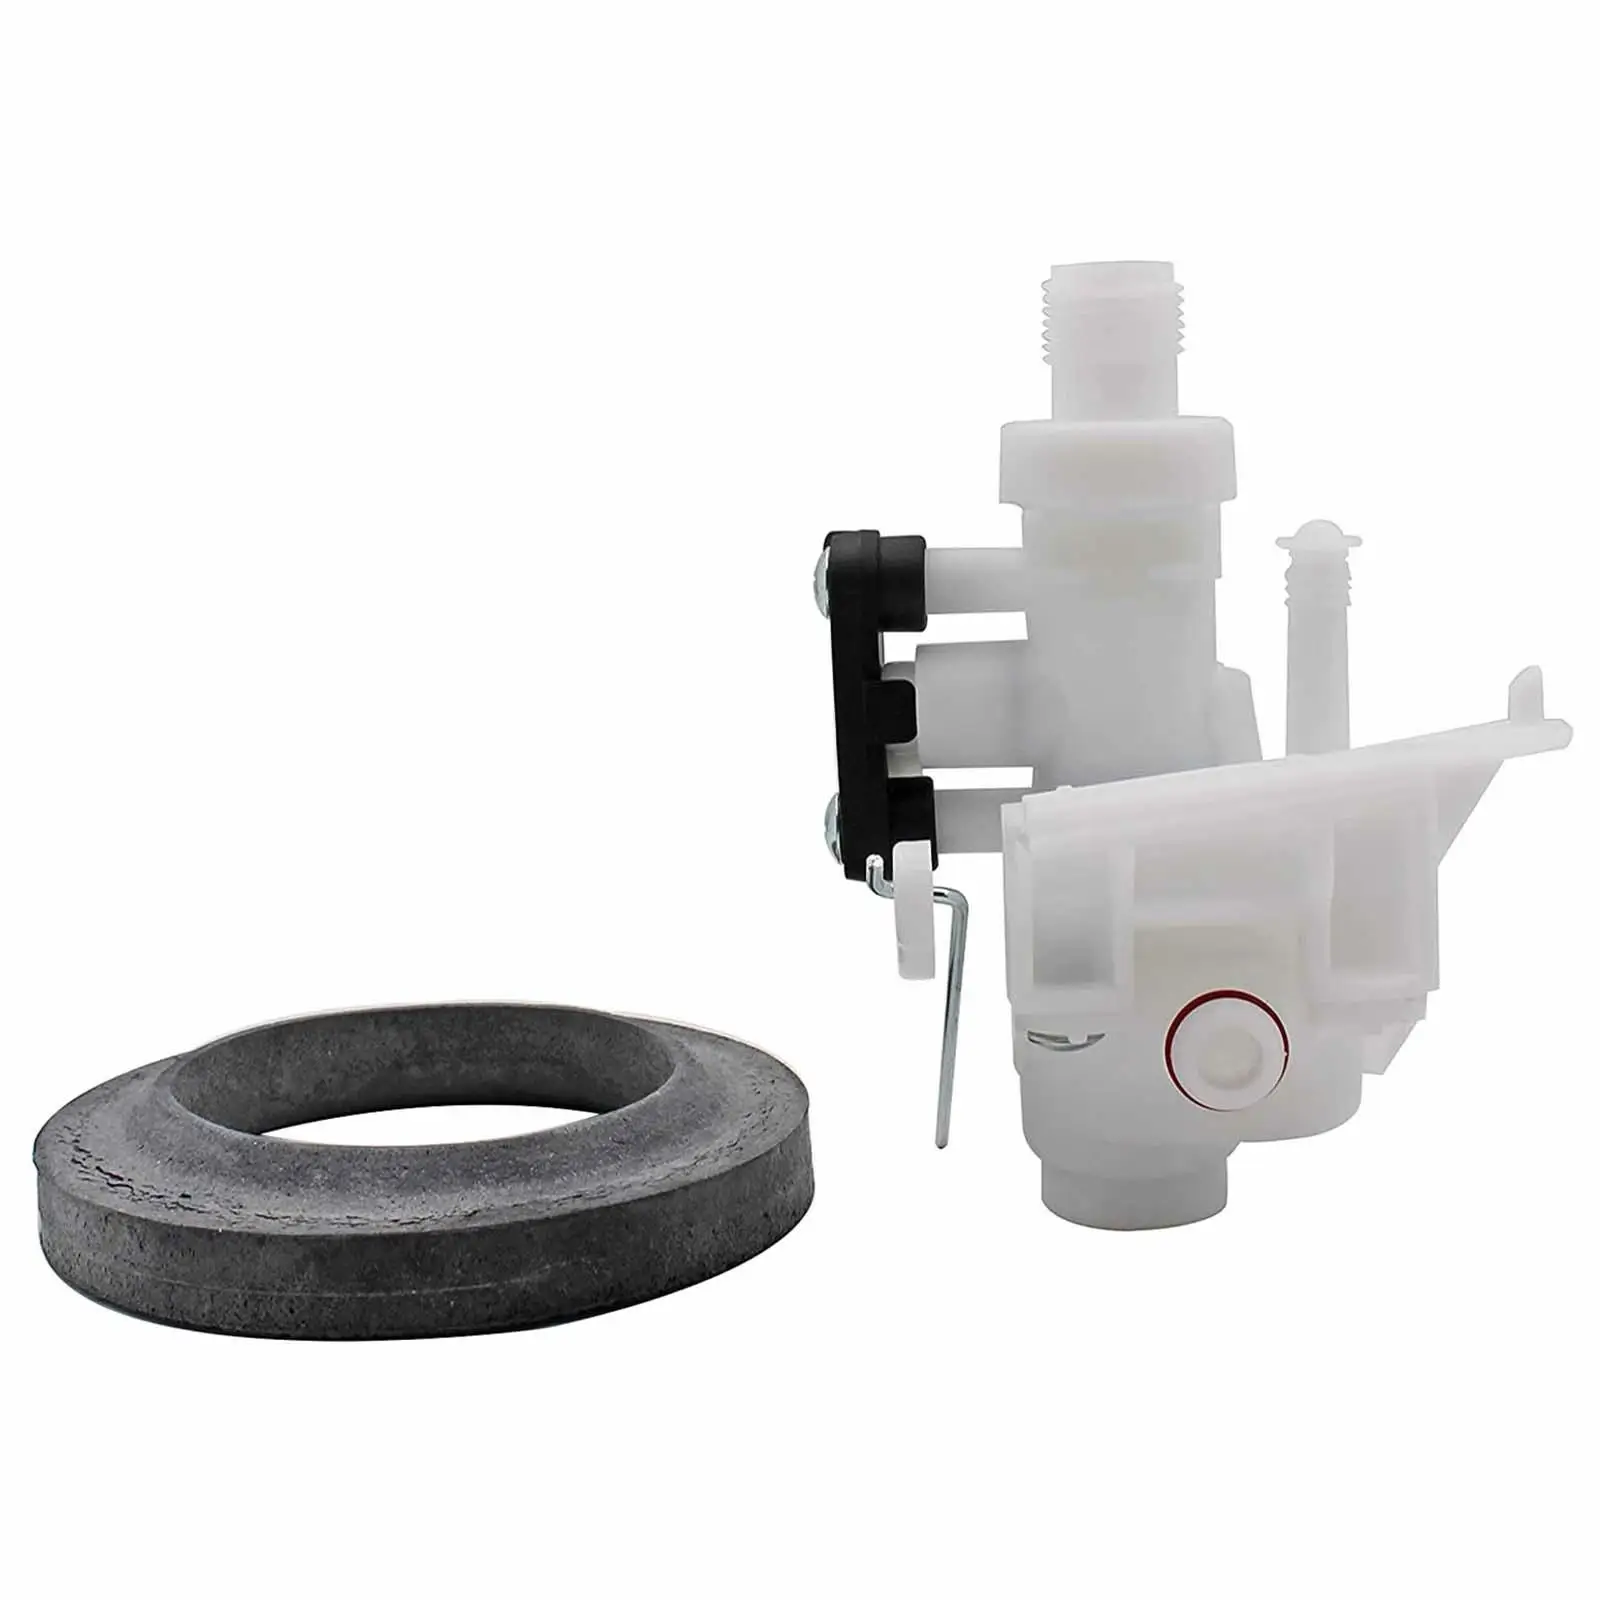 31705 Water Valve Camper Trailer Toilet Repair Kits for Camper Replacements